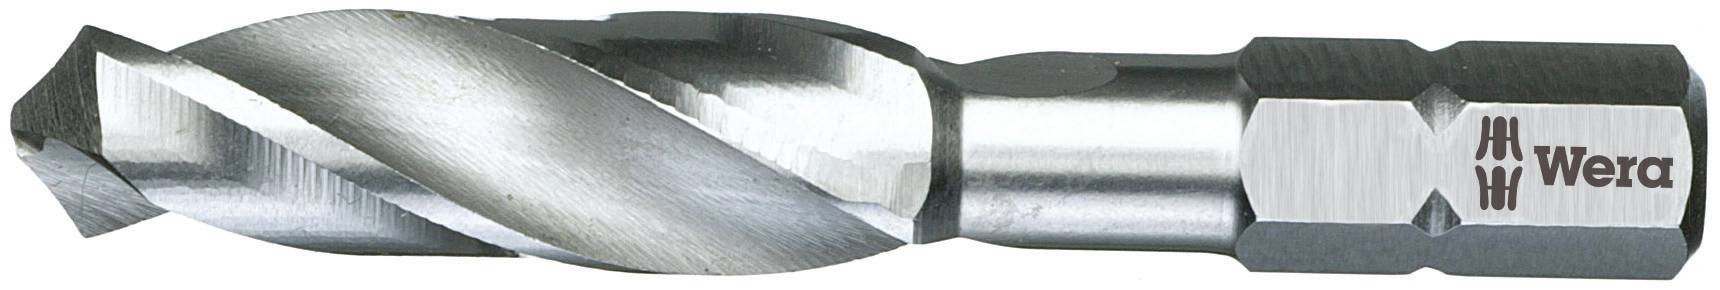 WERA HSS Metall-Spiralbohrer 8 mm 05104620001 Gesamtlänge 51 mm 1/4\" (6.3 mm) 1 St. (05104620001)